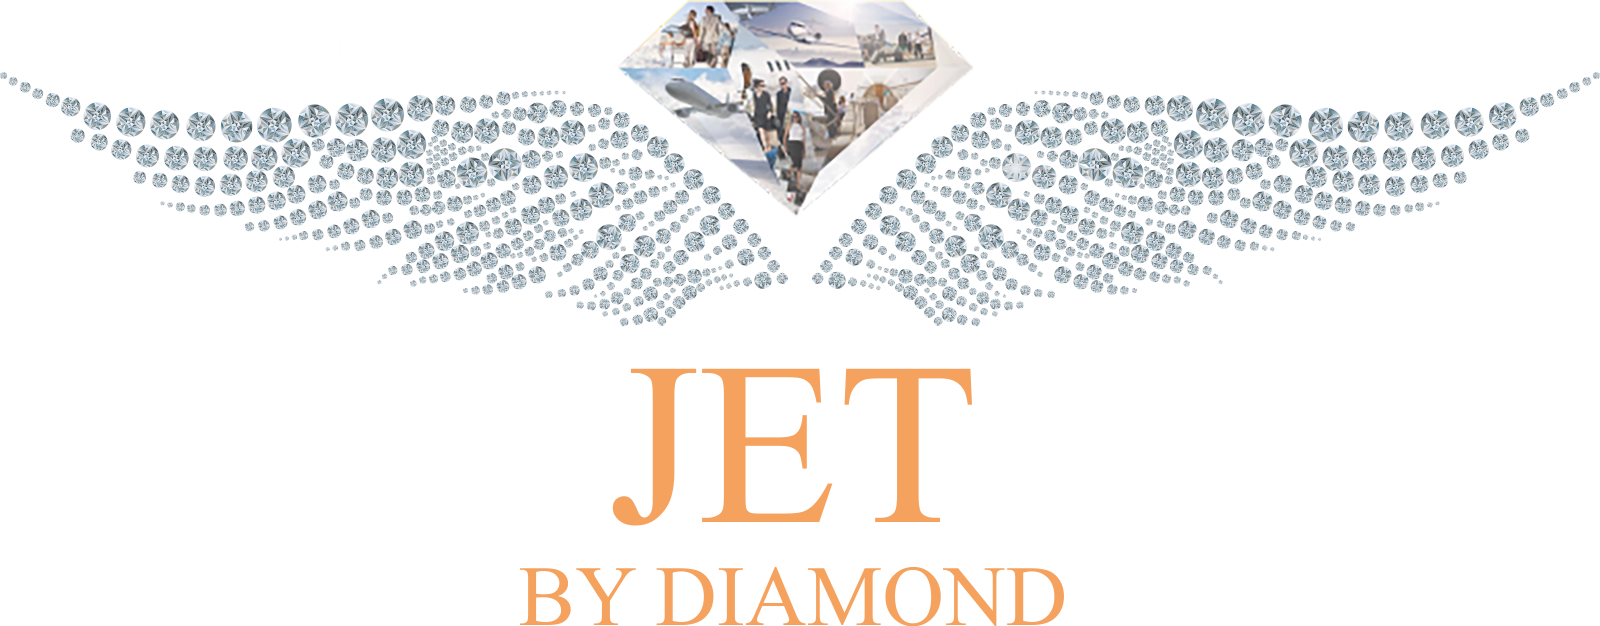 Jet By Diamond